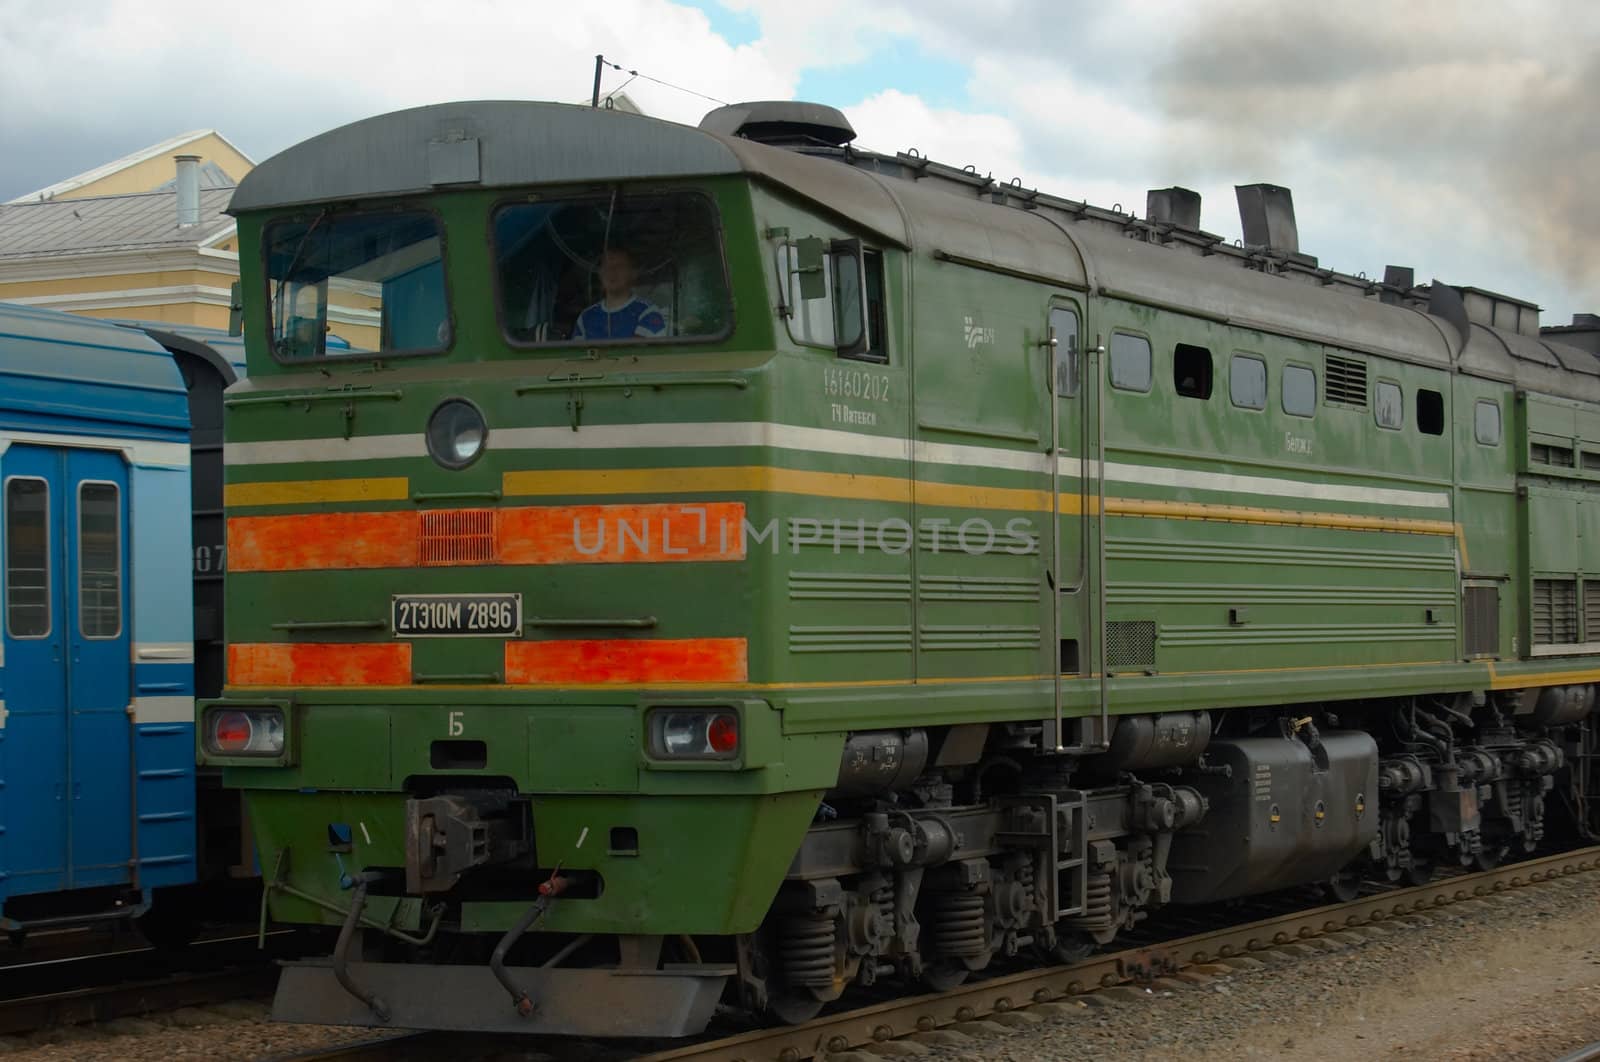 The cargo disel locomotive drives a heavy train